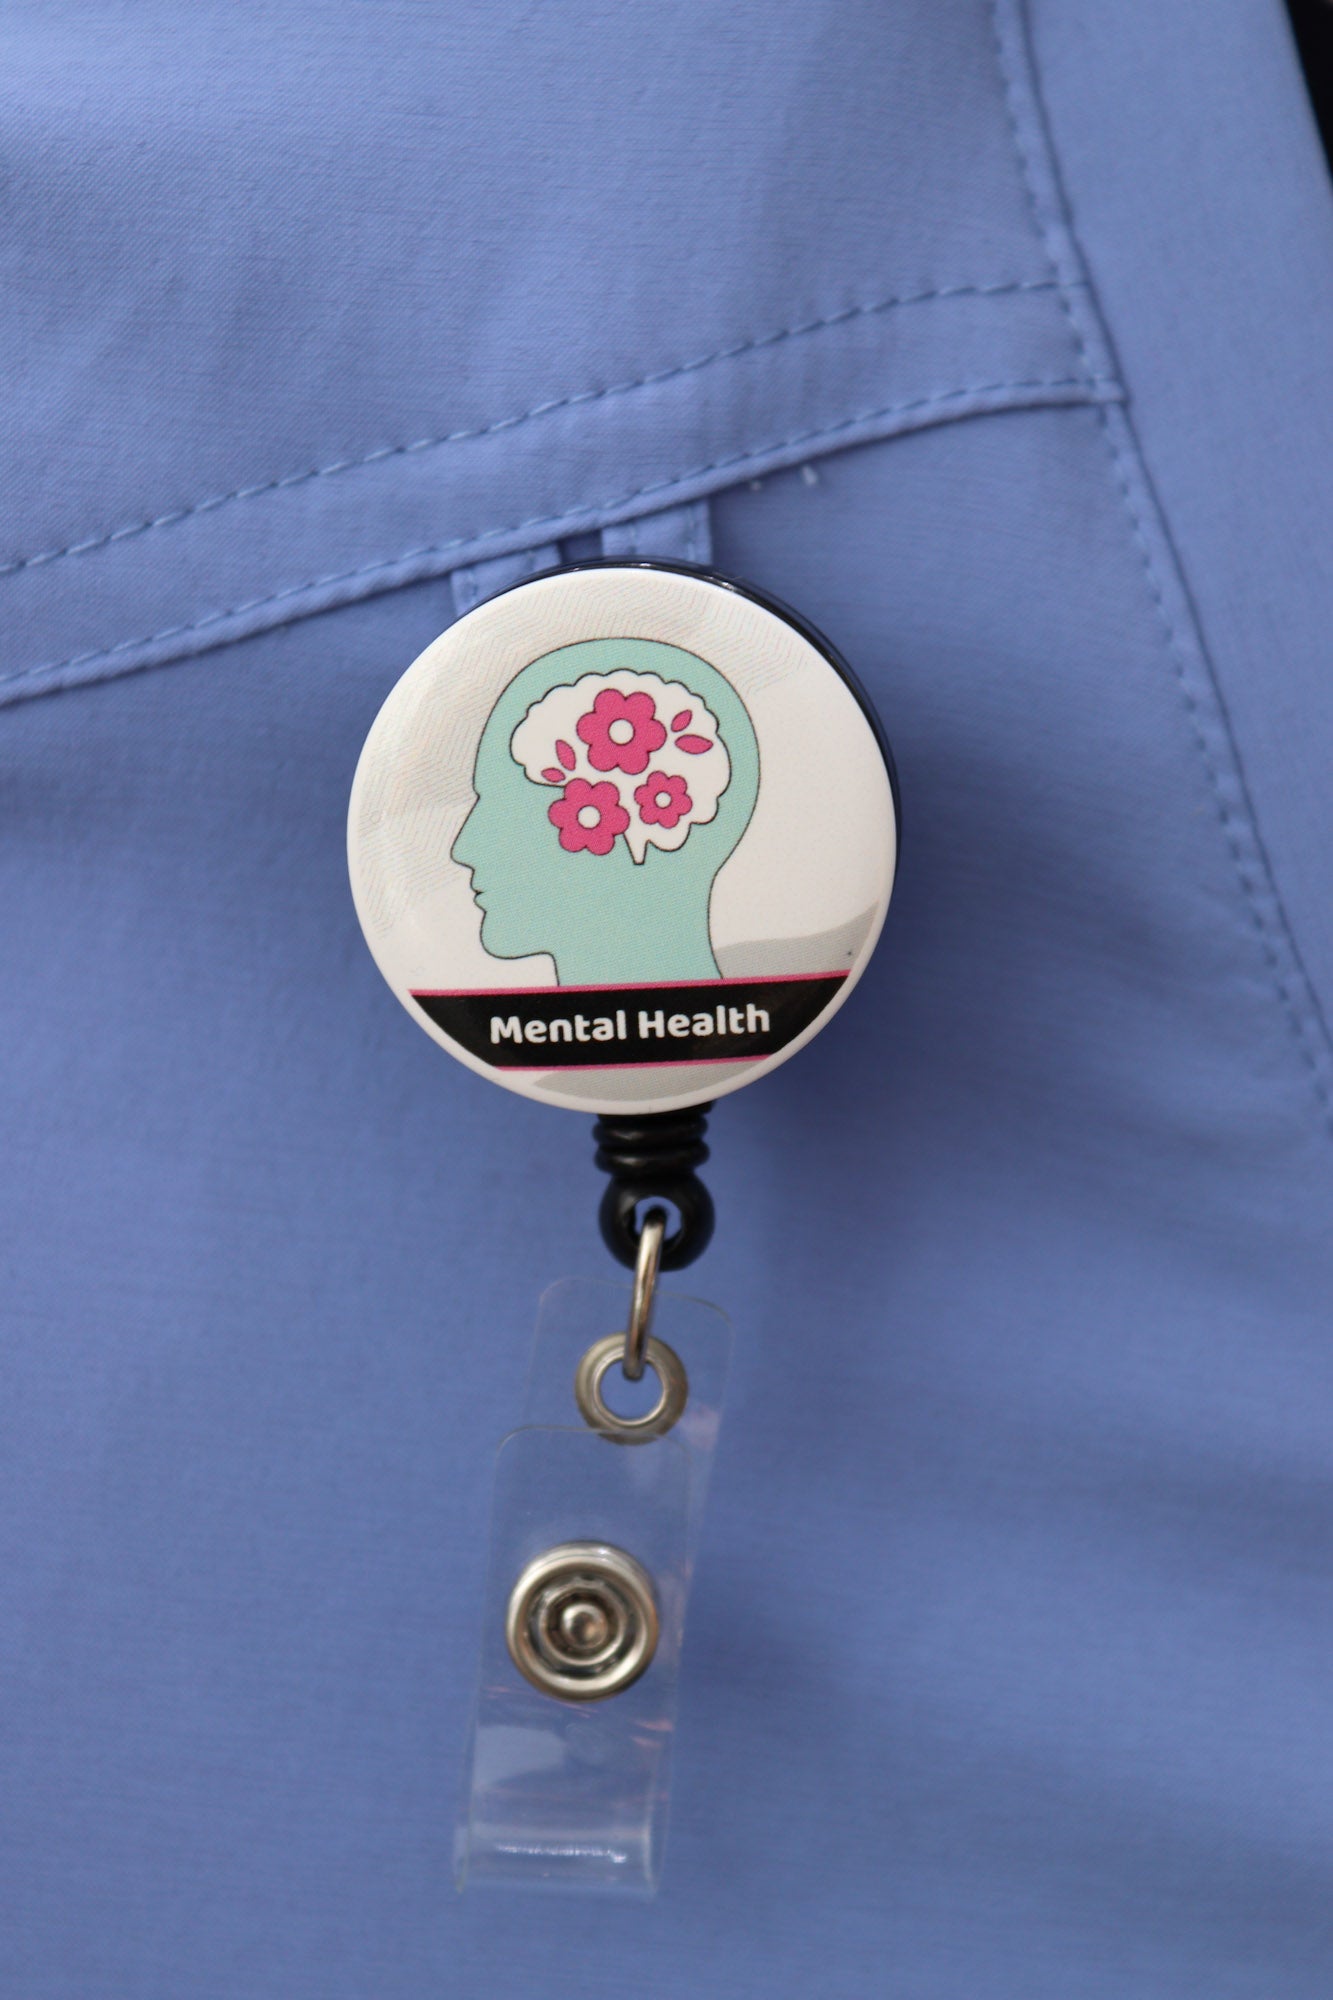 Image of a Mental Health ID Badge